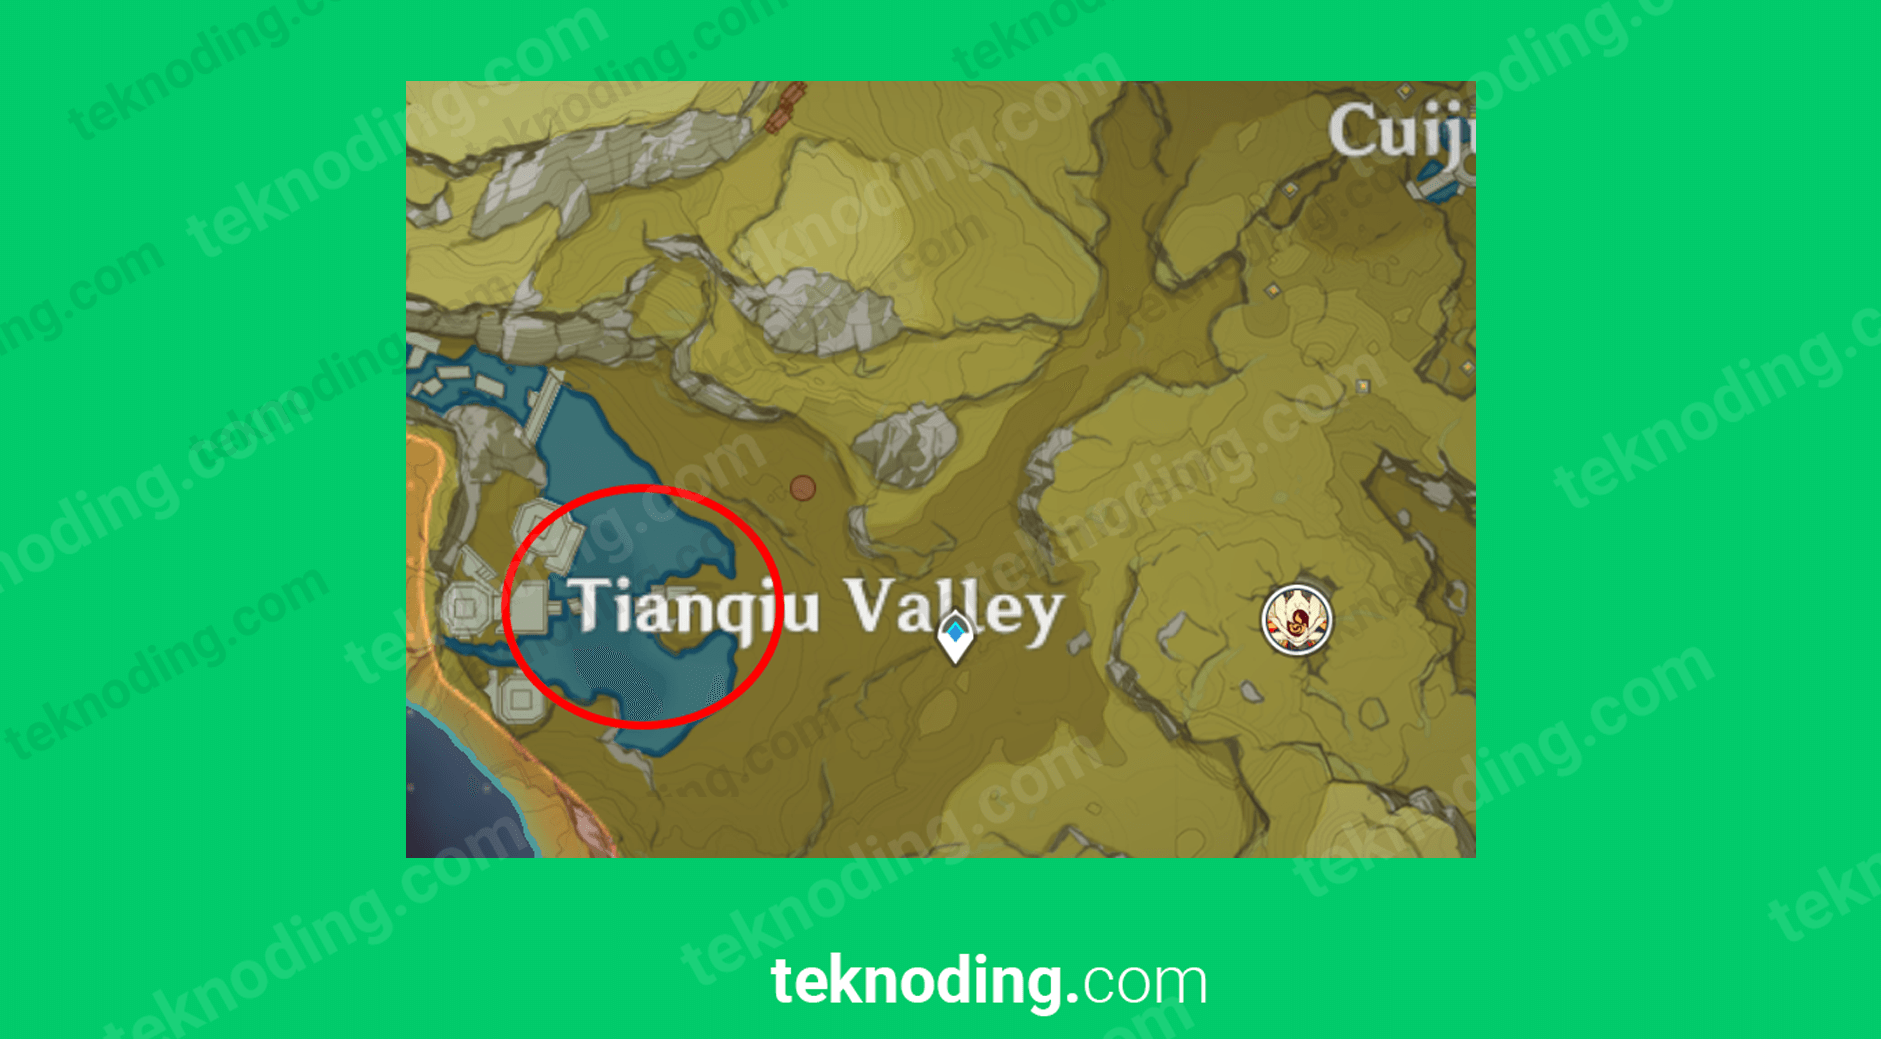 Tianqiu Valley unusual hilichurl